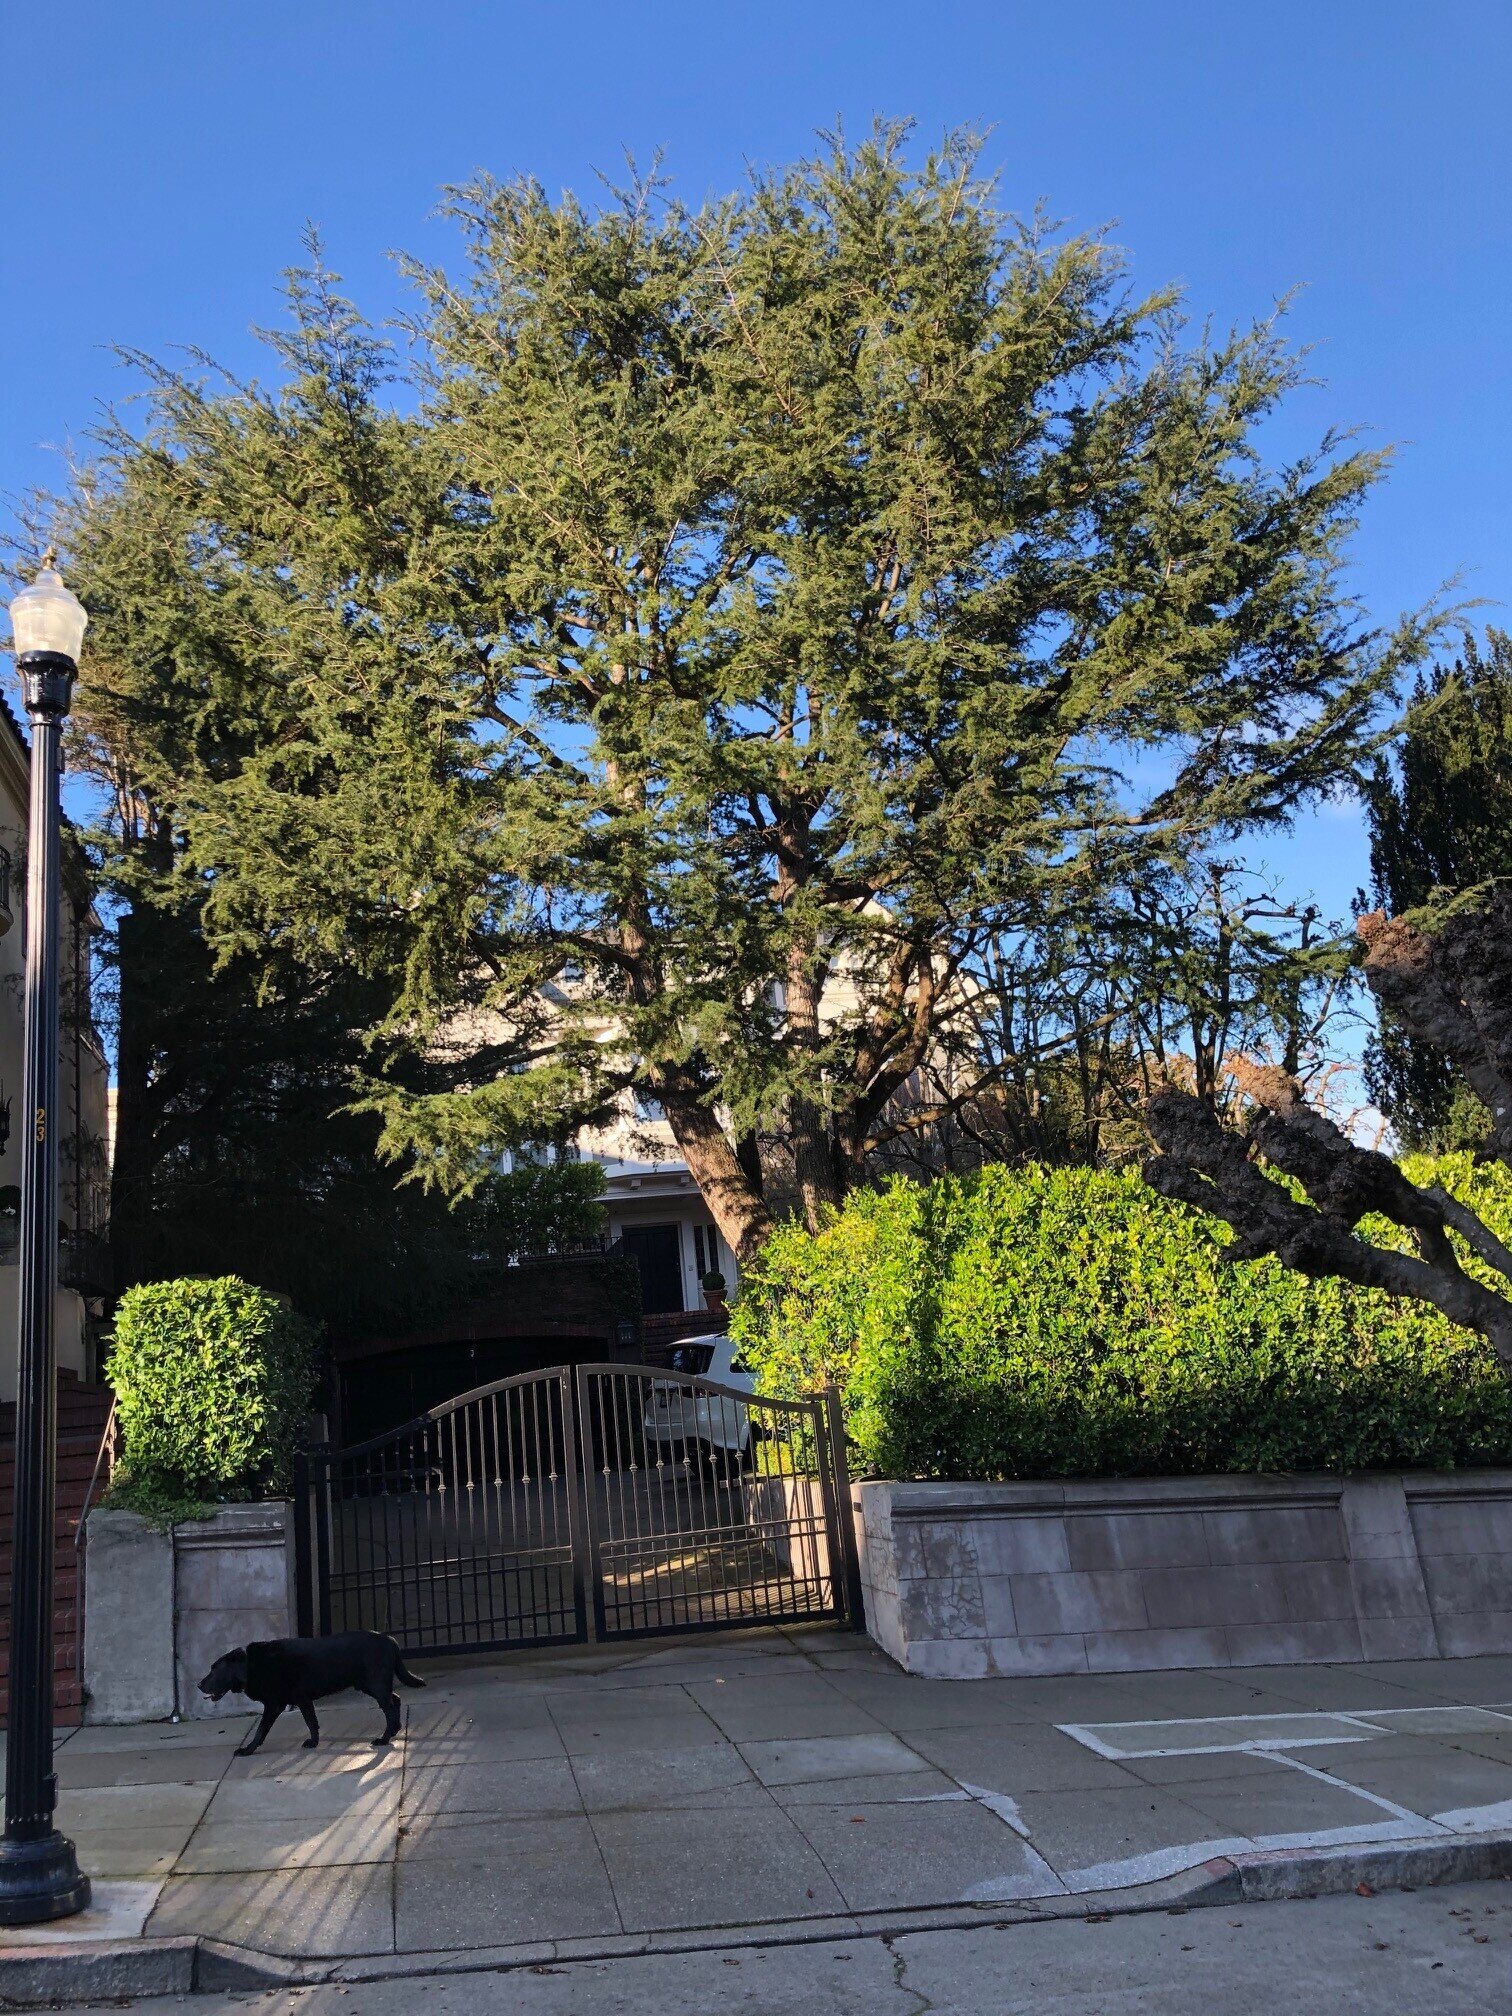 Littleleaf linden - Sacramento Tree Foundation